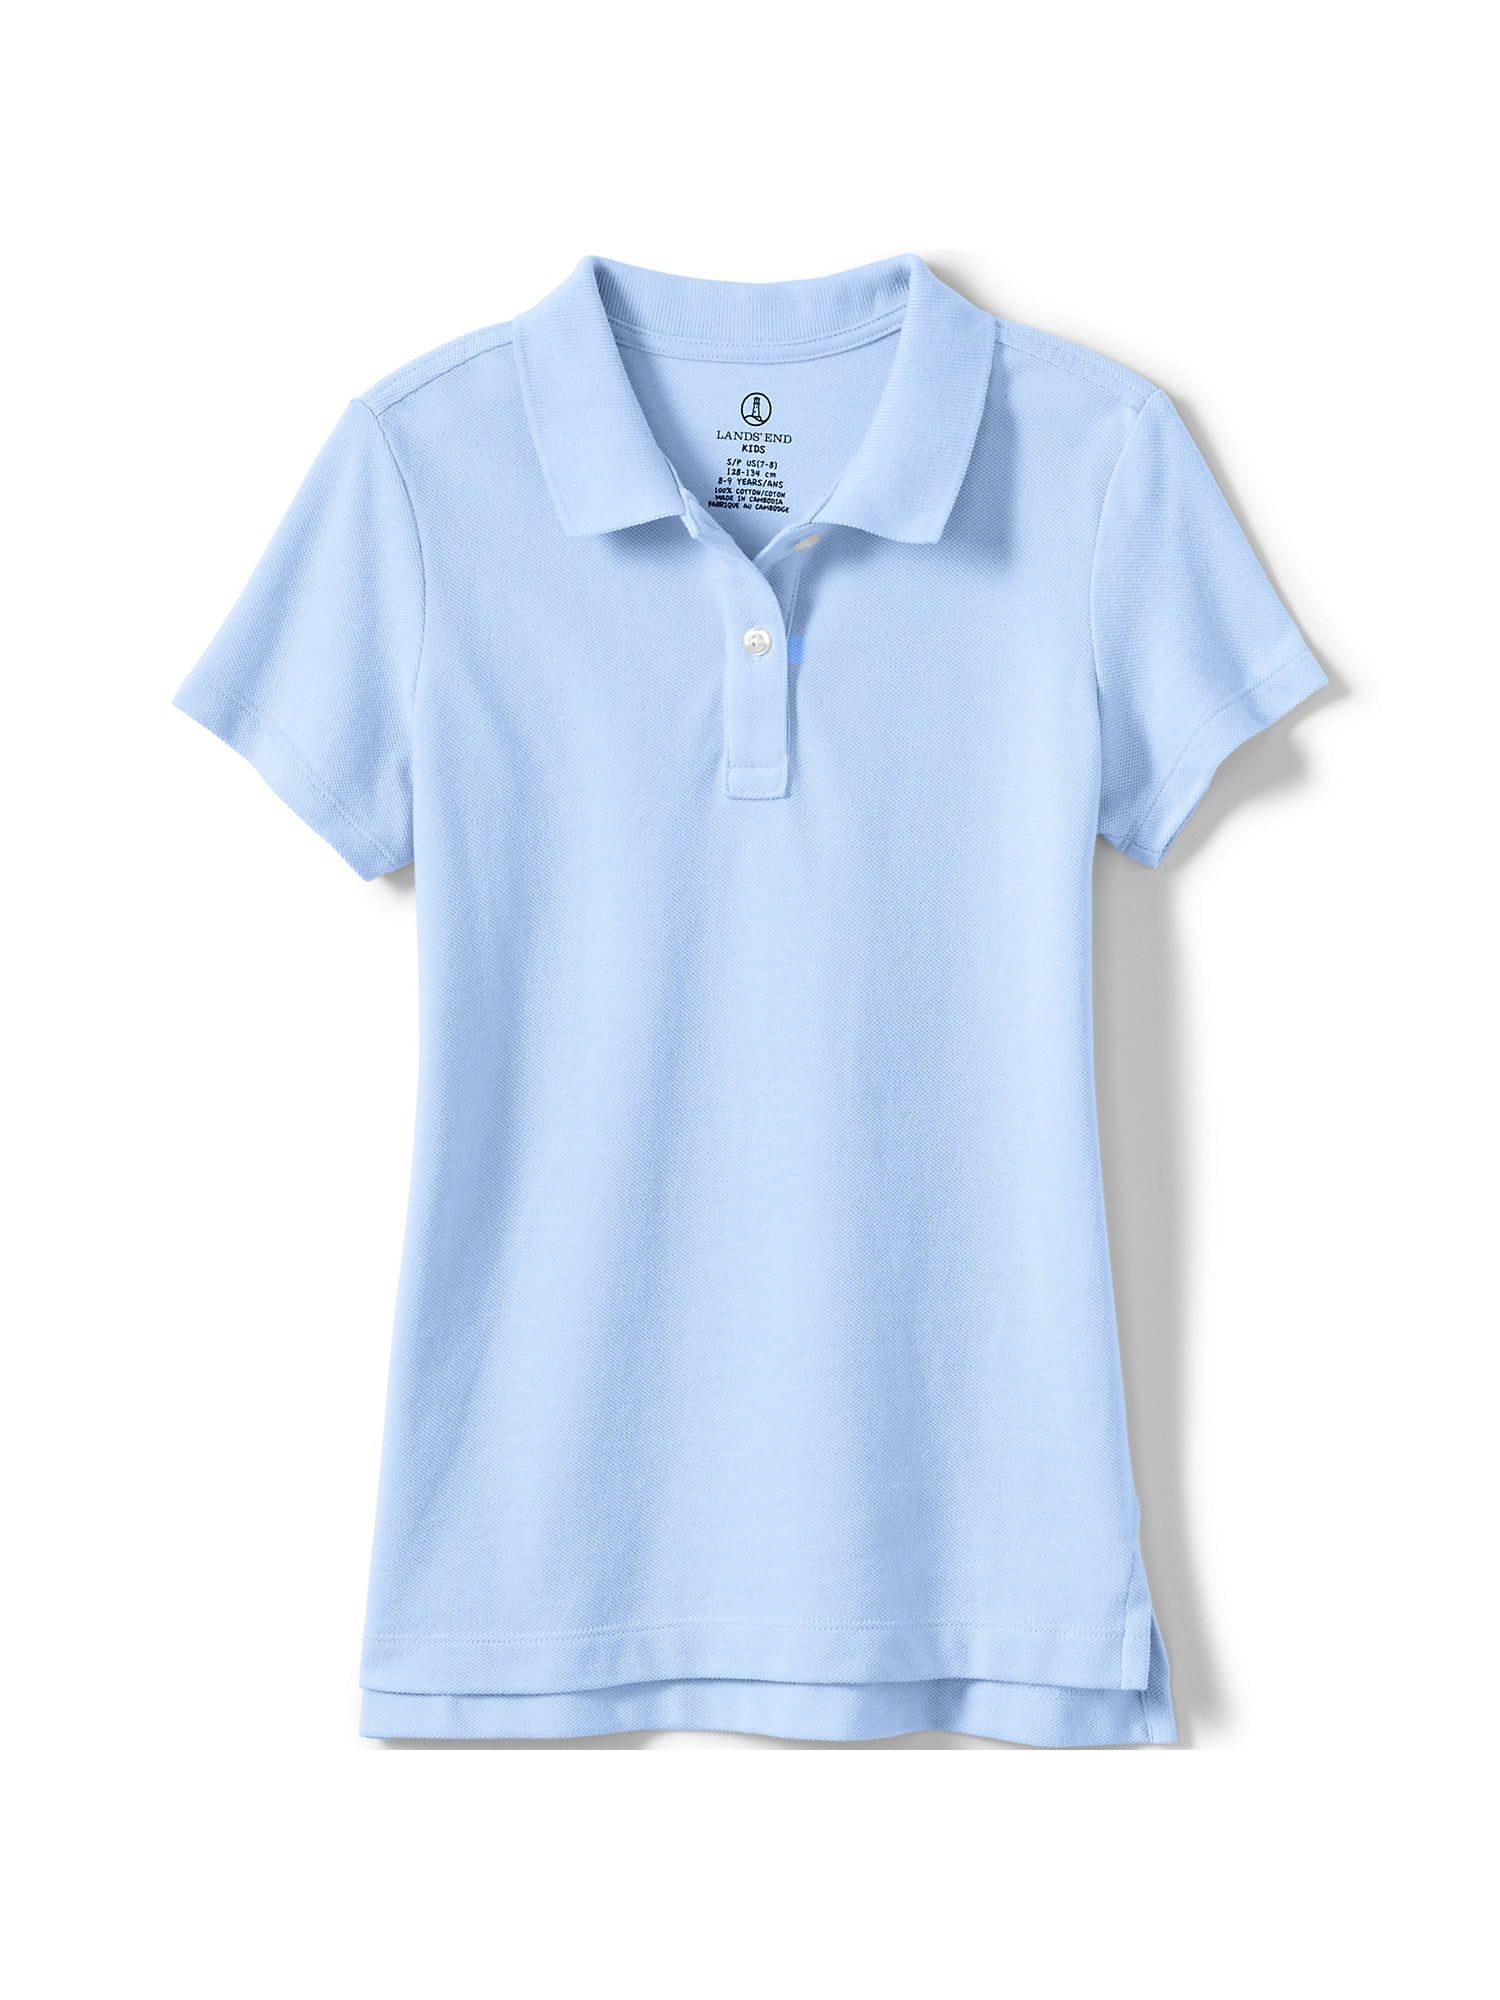 Lands' End School Uniform Girls Short Sleeve Feminine Fit Mesh Polo Shirt | Walmart (US)